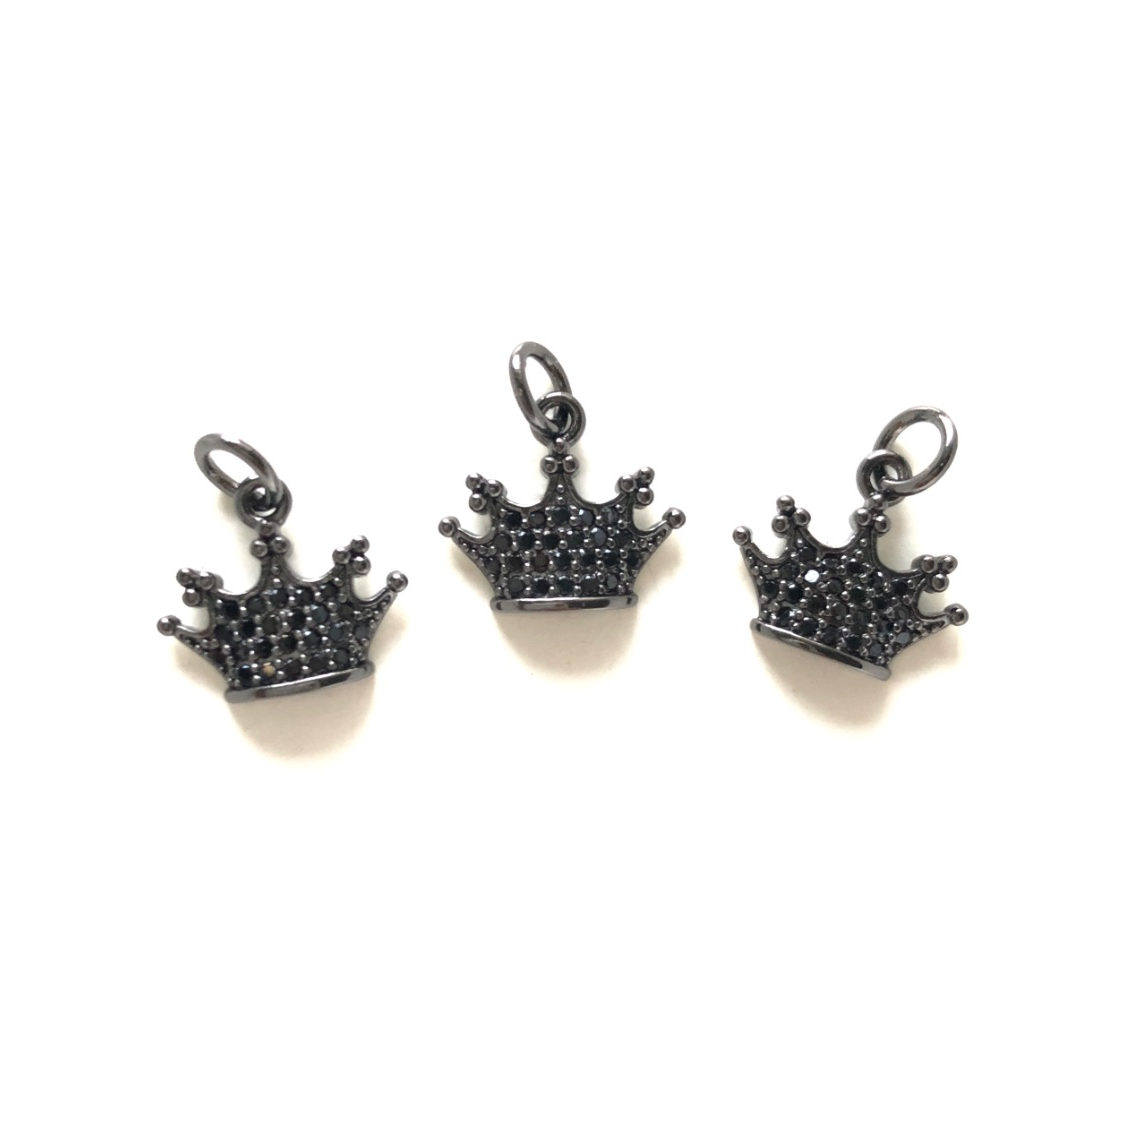 10pcs/lot 12.5*11mm Small Size CZ Pave Crown Charms Black on Black CZ Paved Charms Crowns Small Sizes Charms Beads Beyond